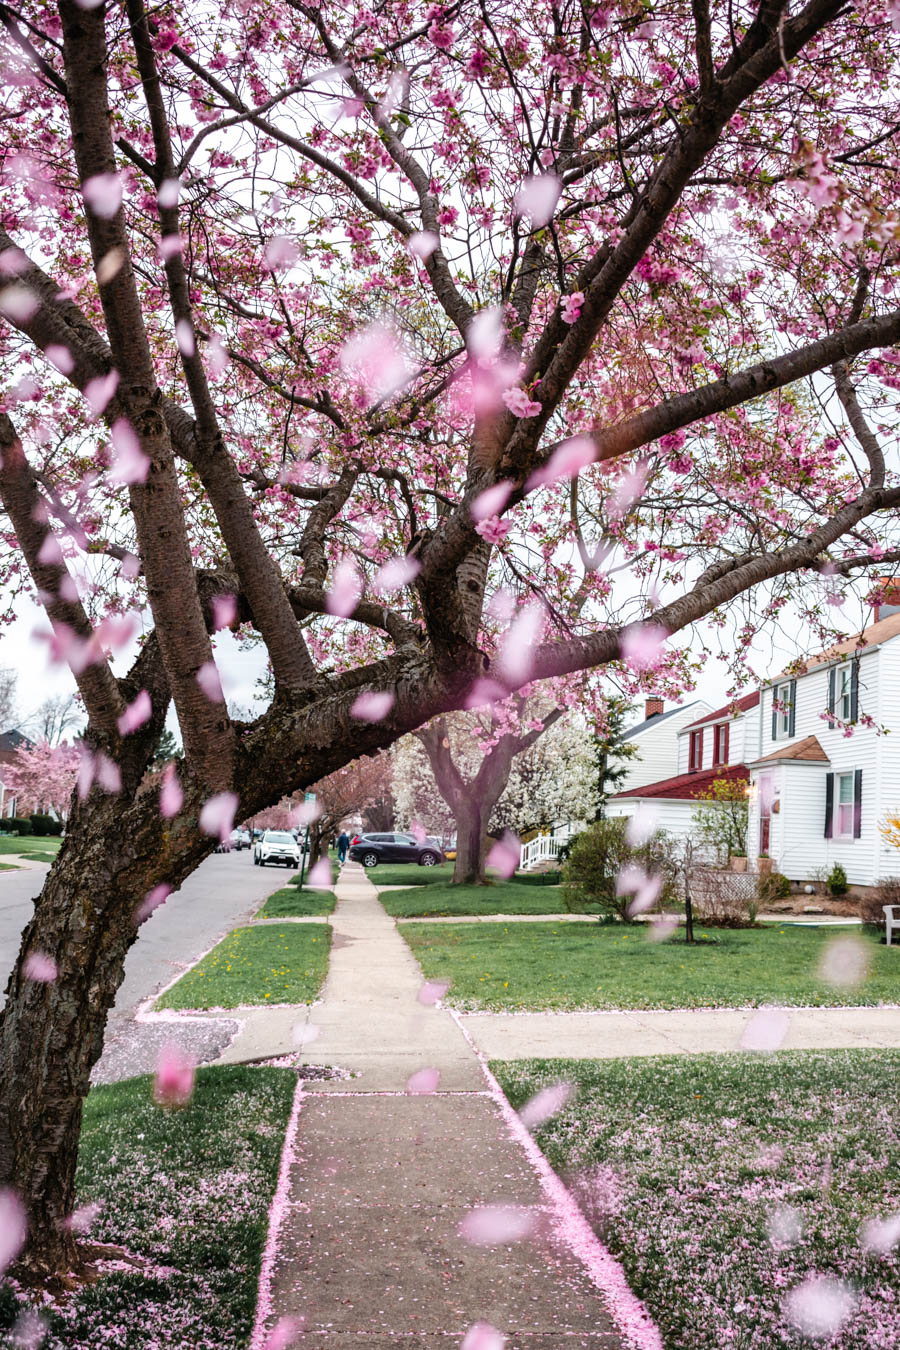 Street with Cherry Blossoms in Buffalo NY